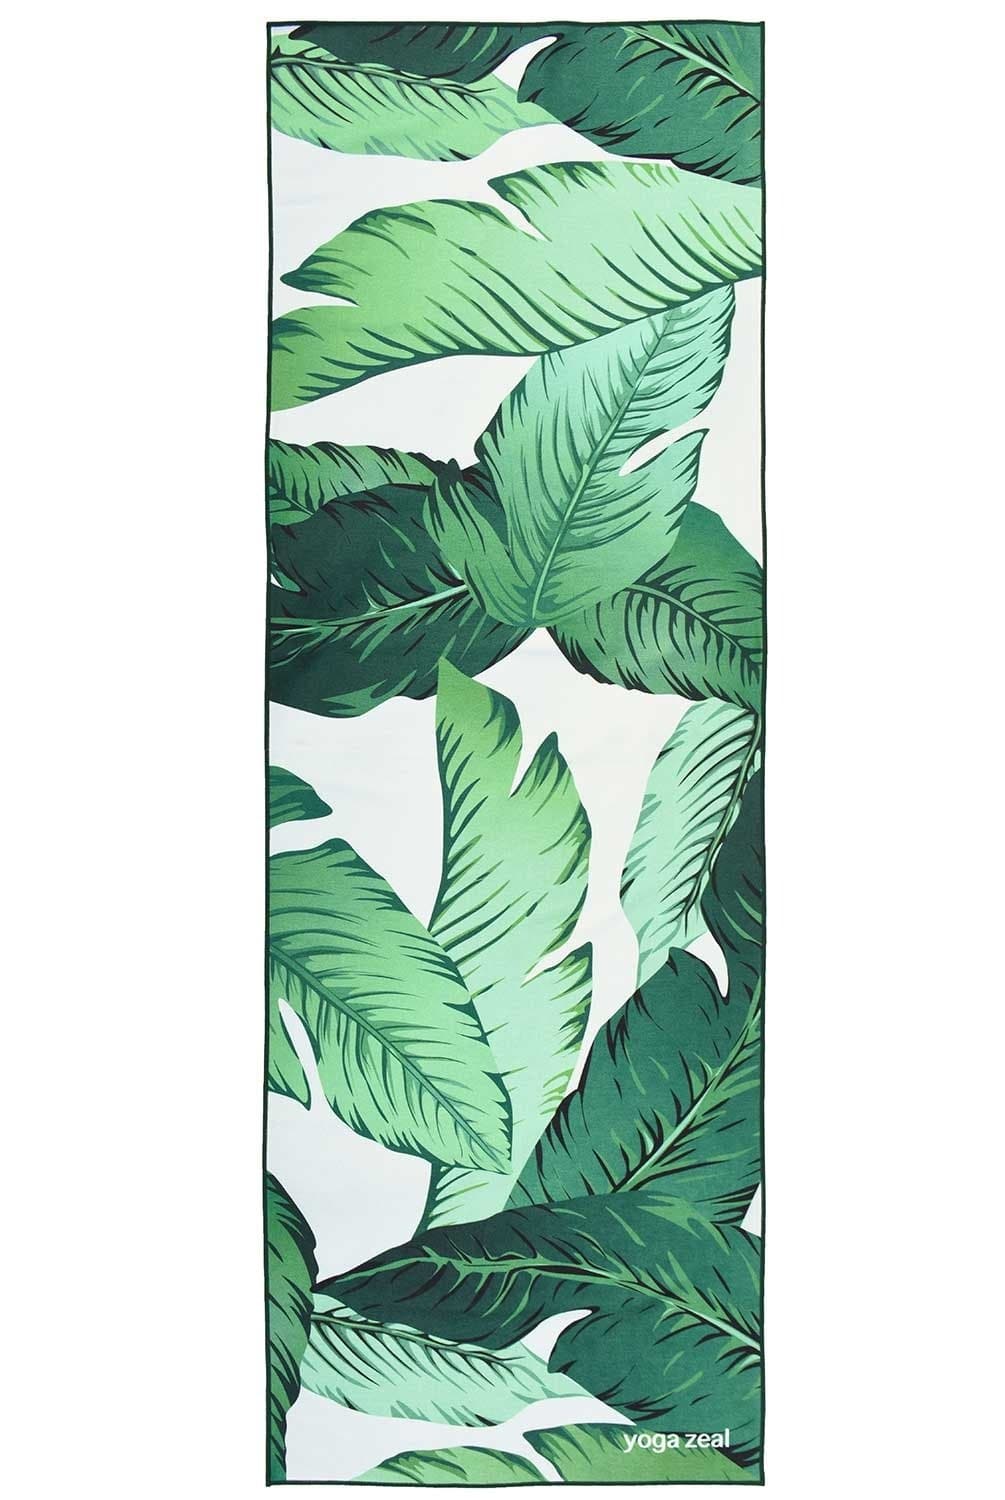 Yoga Zeal Banana Leaf Yoga Towel - Evolve Fit Wear